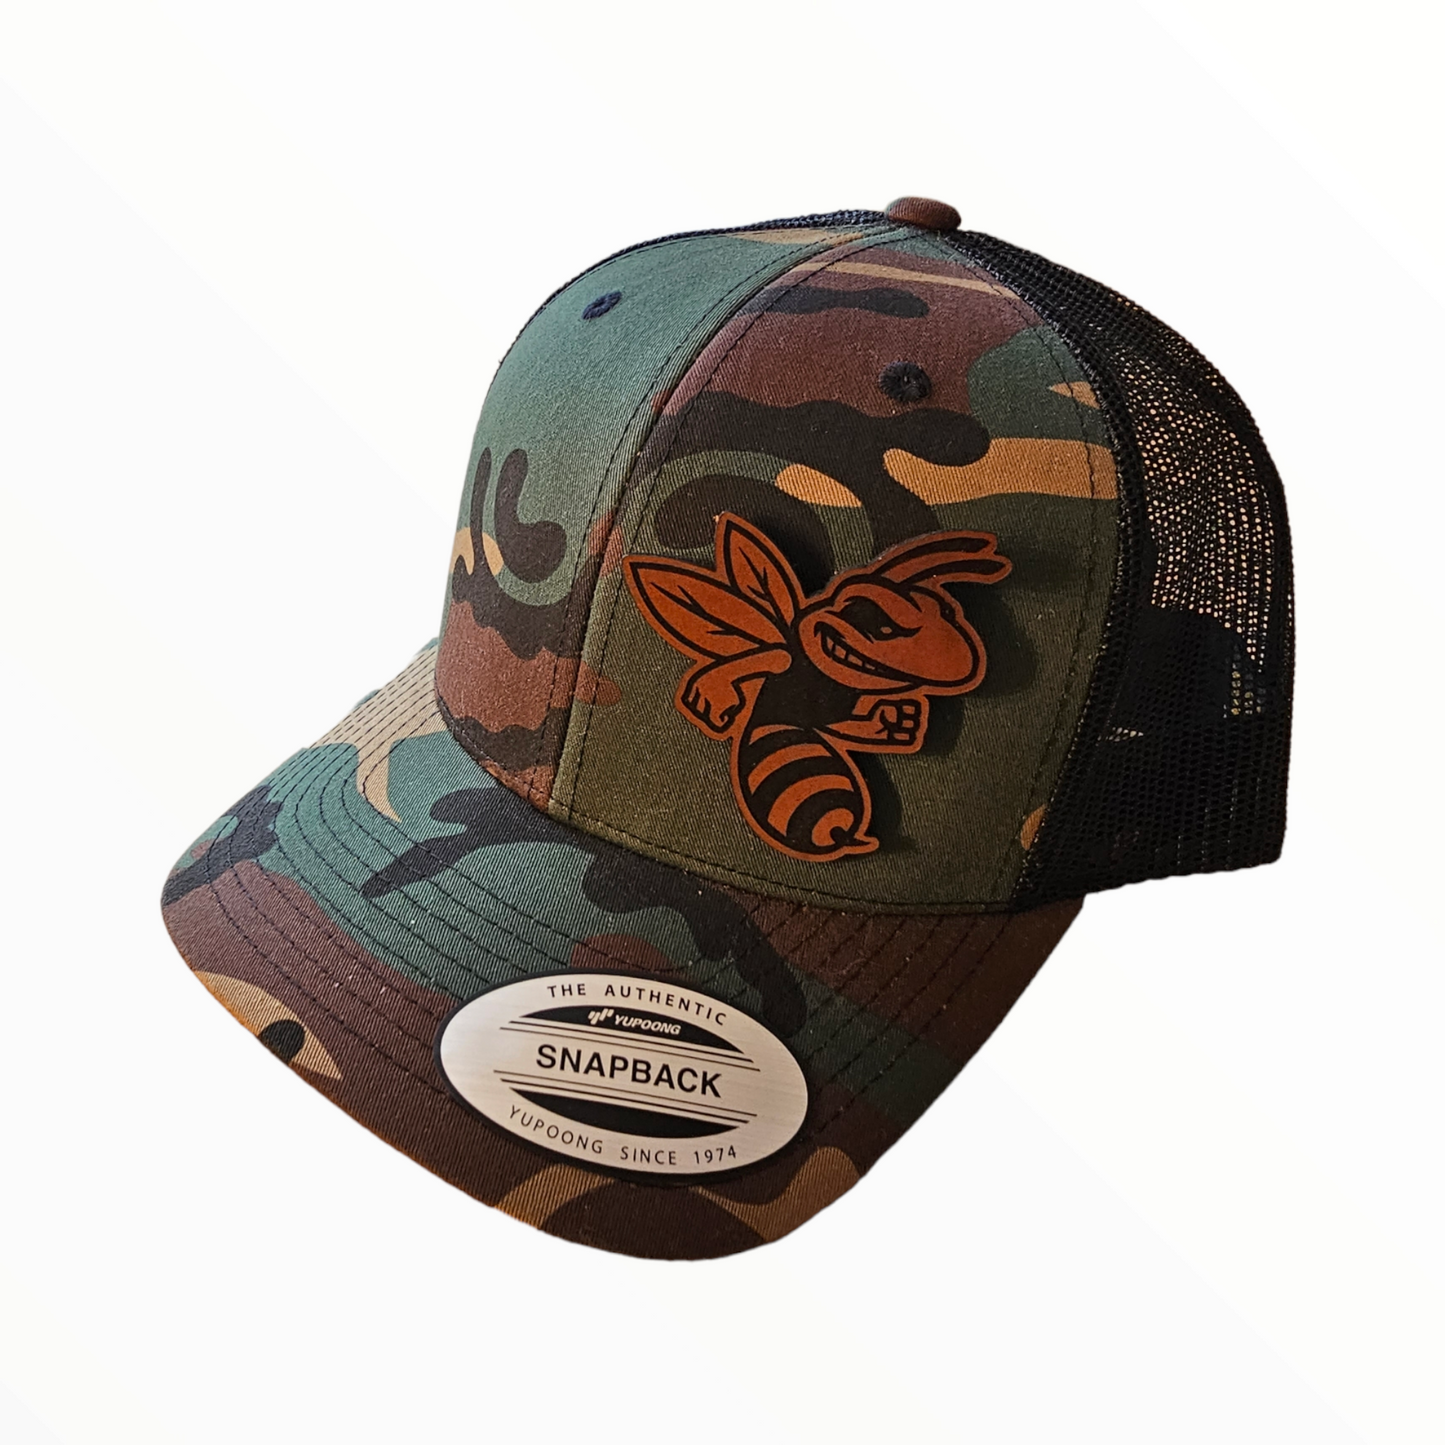 Hornets Leather Side Patch Snapback Hat (Black, Camo, Pink)